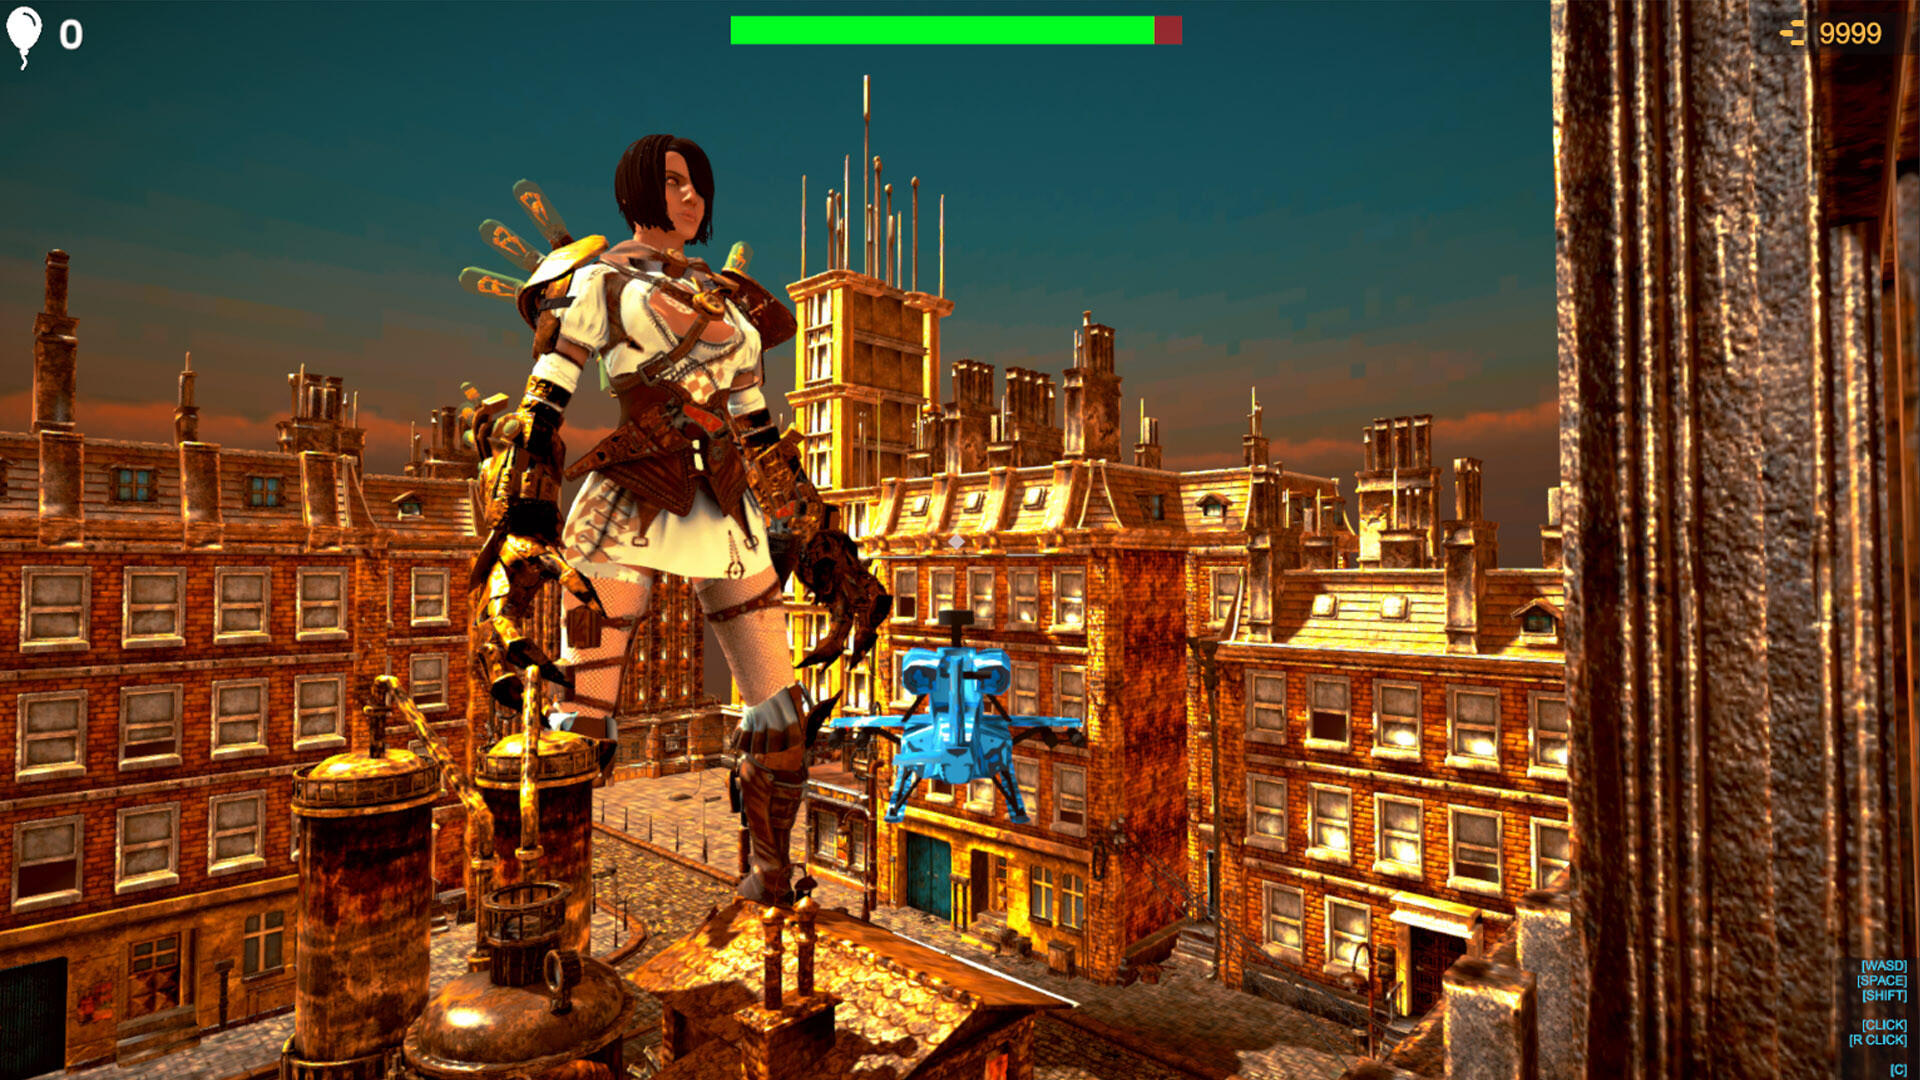 Screenshot 1 of Selamatkan Gadis Raksasa dari monster 4 